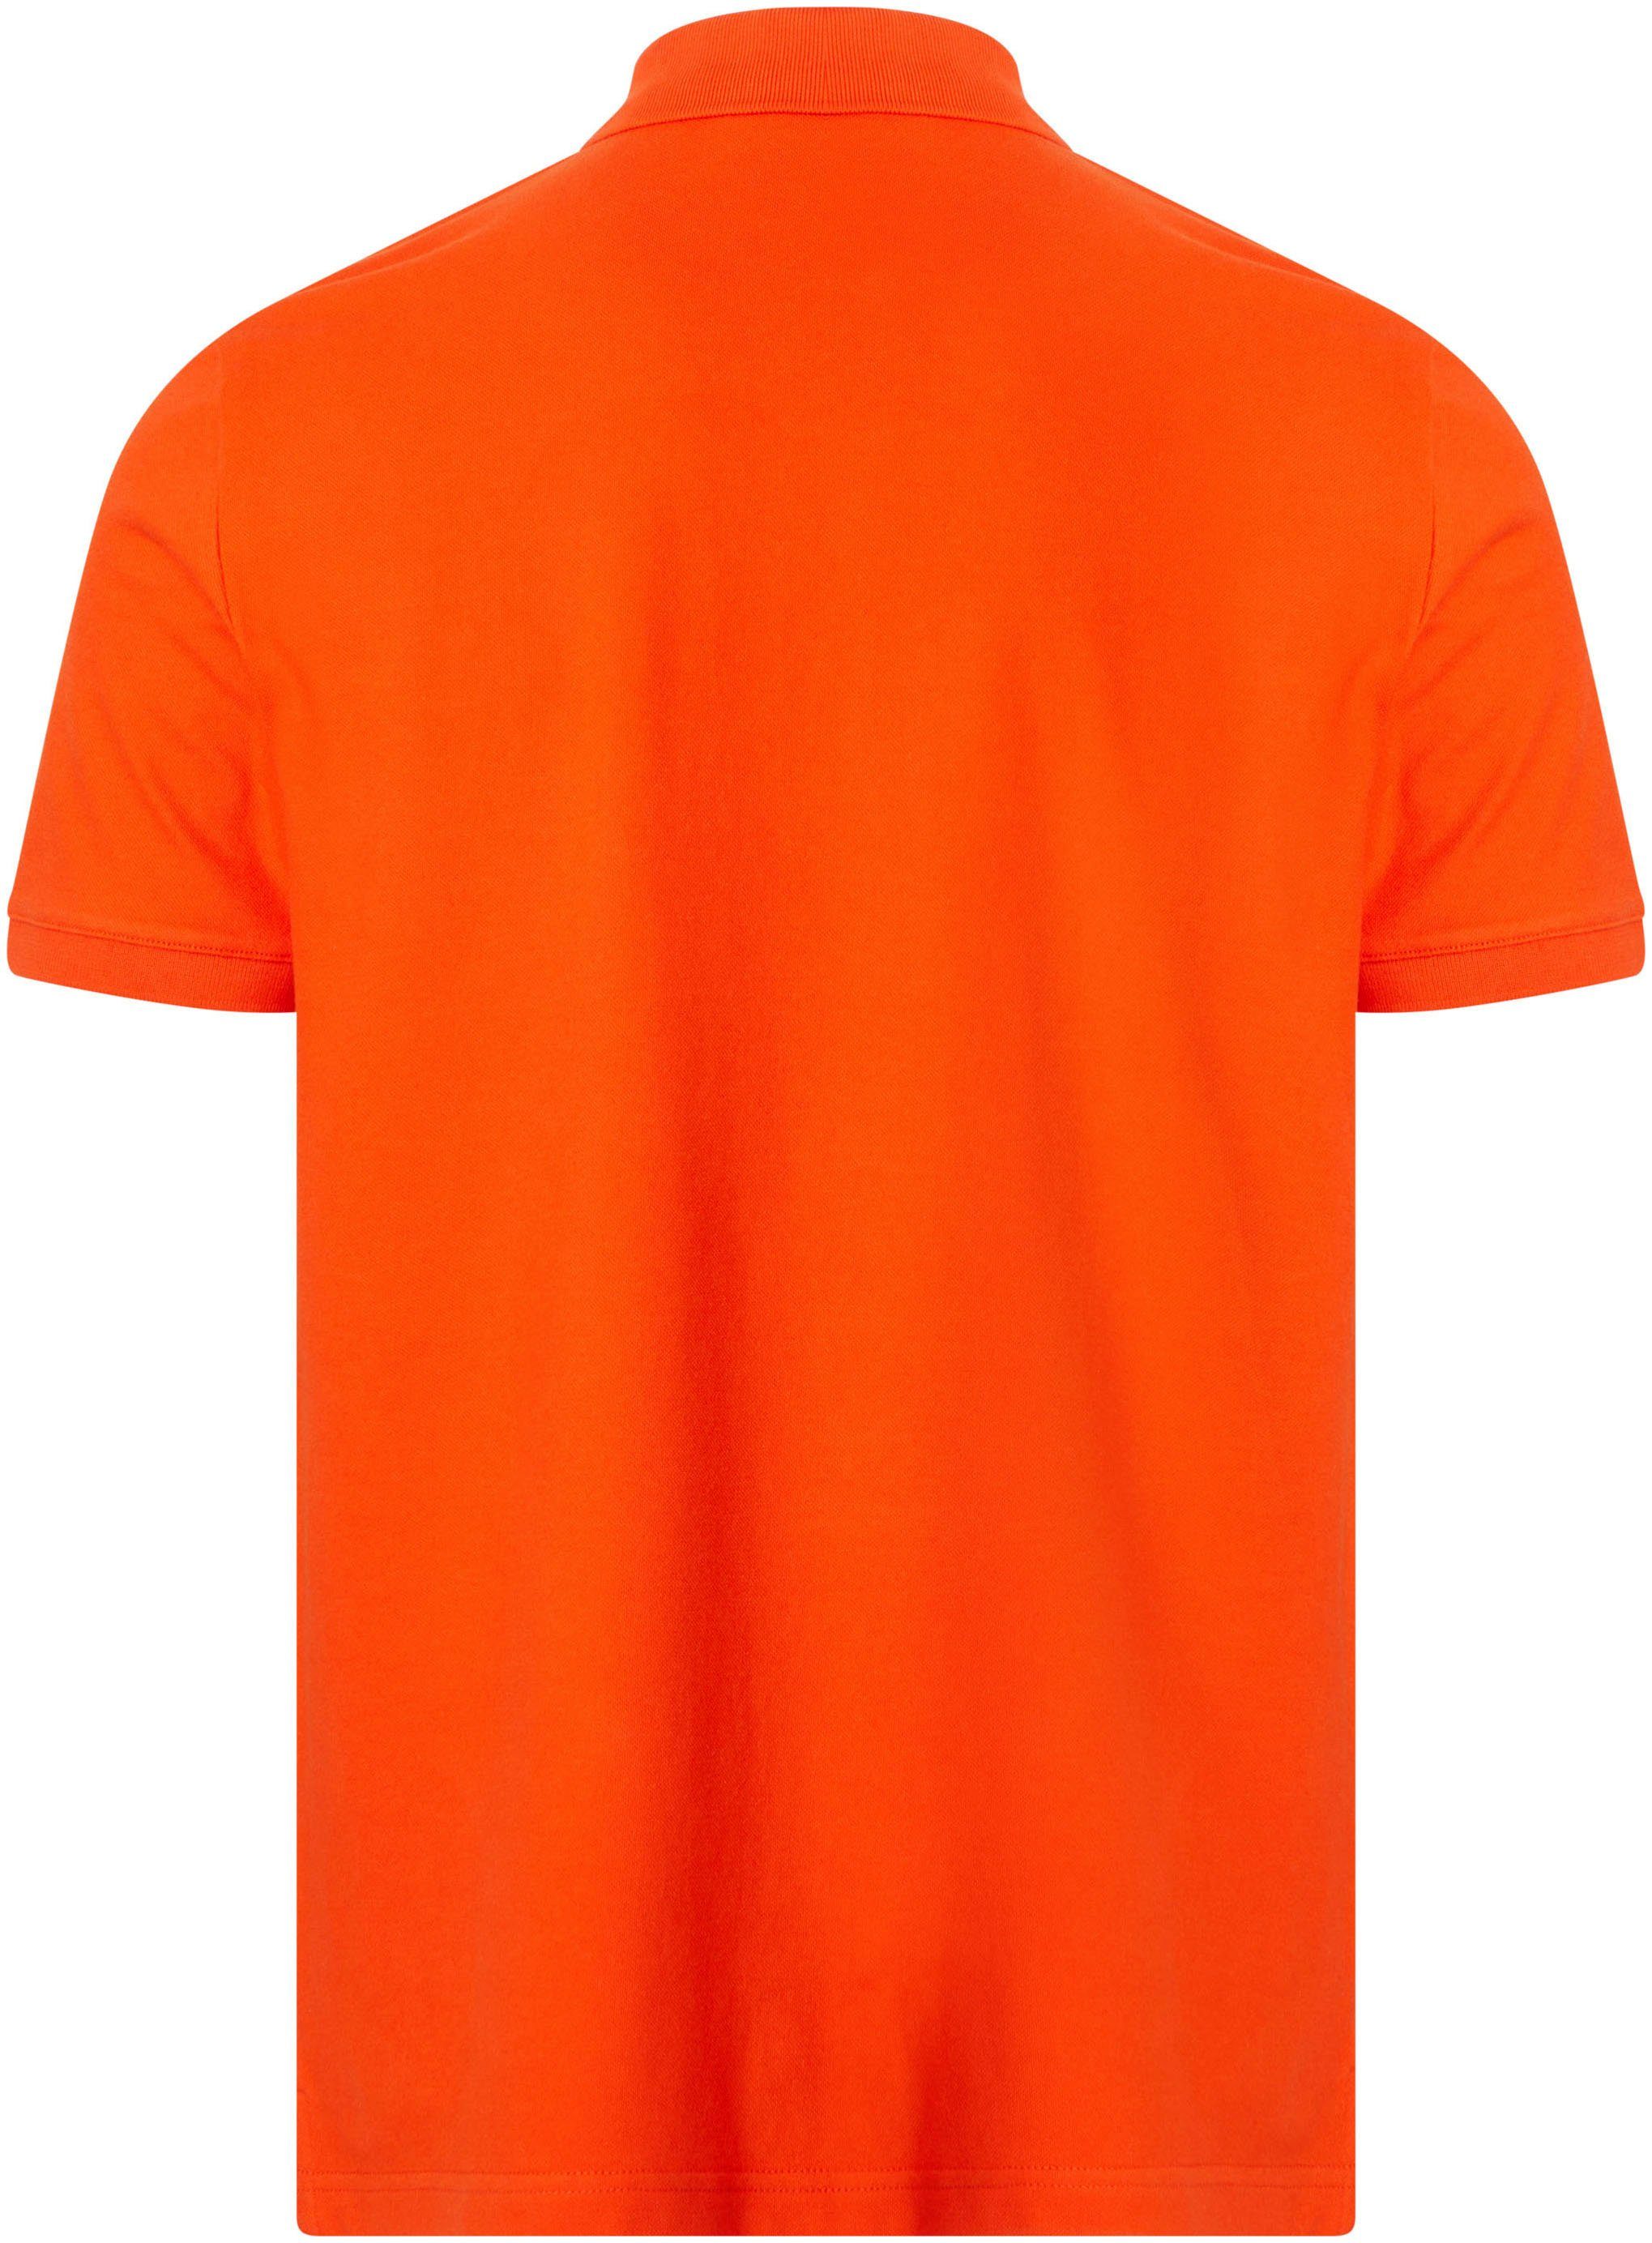 Calvin Big&Tall orange Klein mit Poloshirt Polokragen